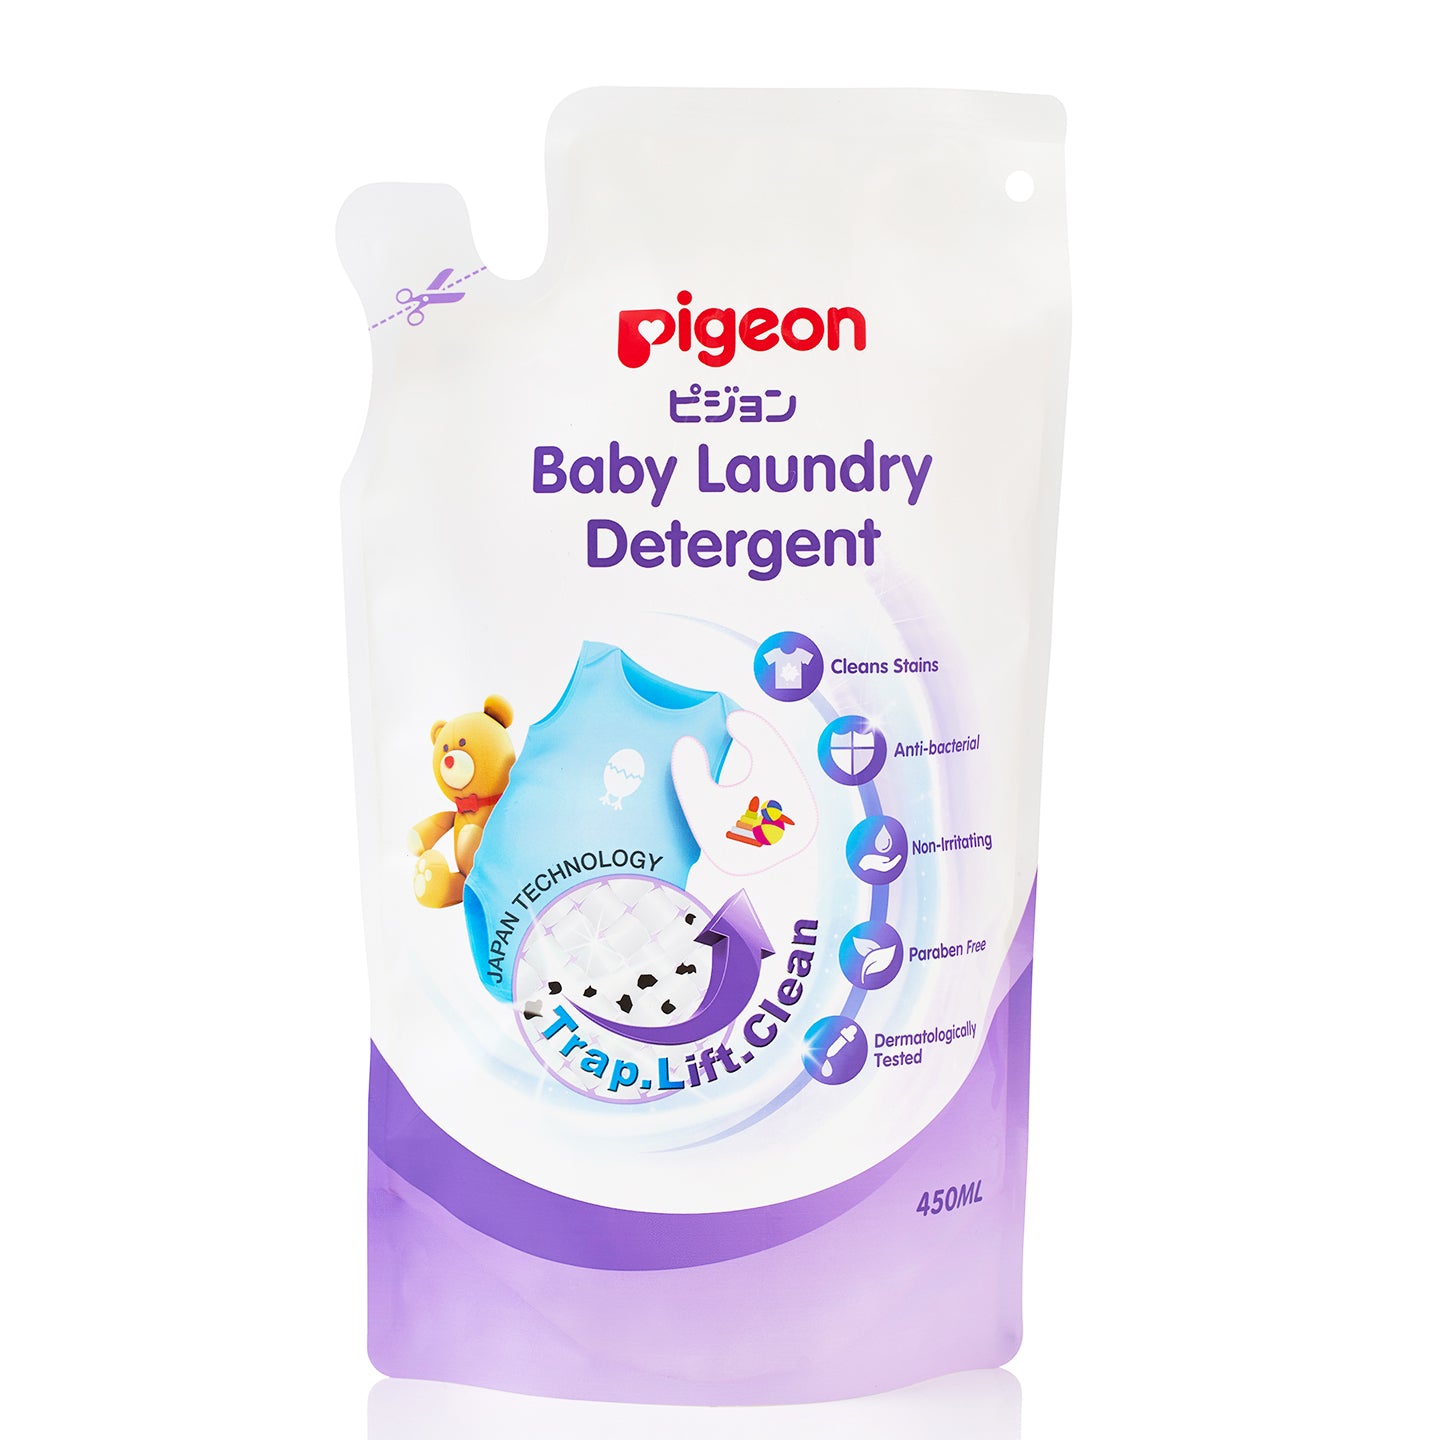 Buy 9 Liquid Detergent 450ml free 450ml Liquid Detergent ( Bulk purchase )